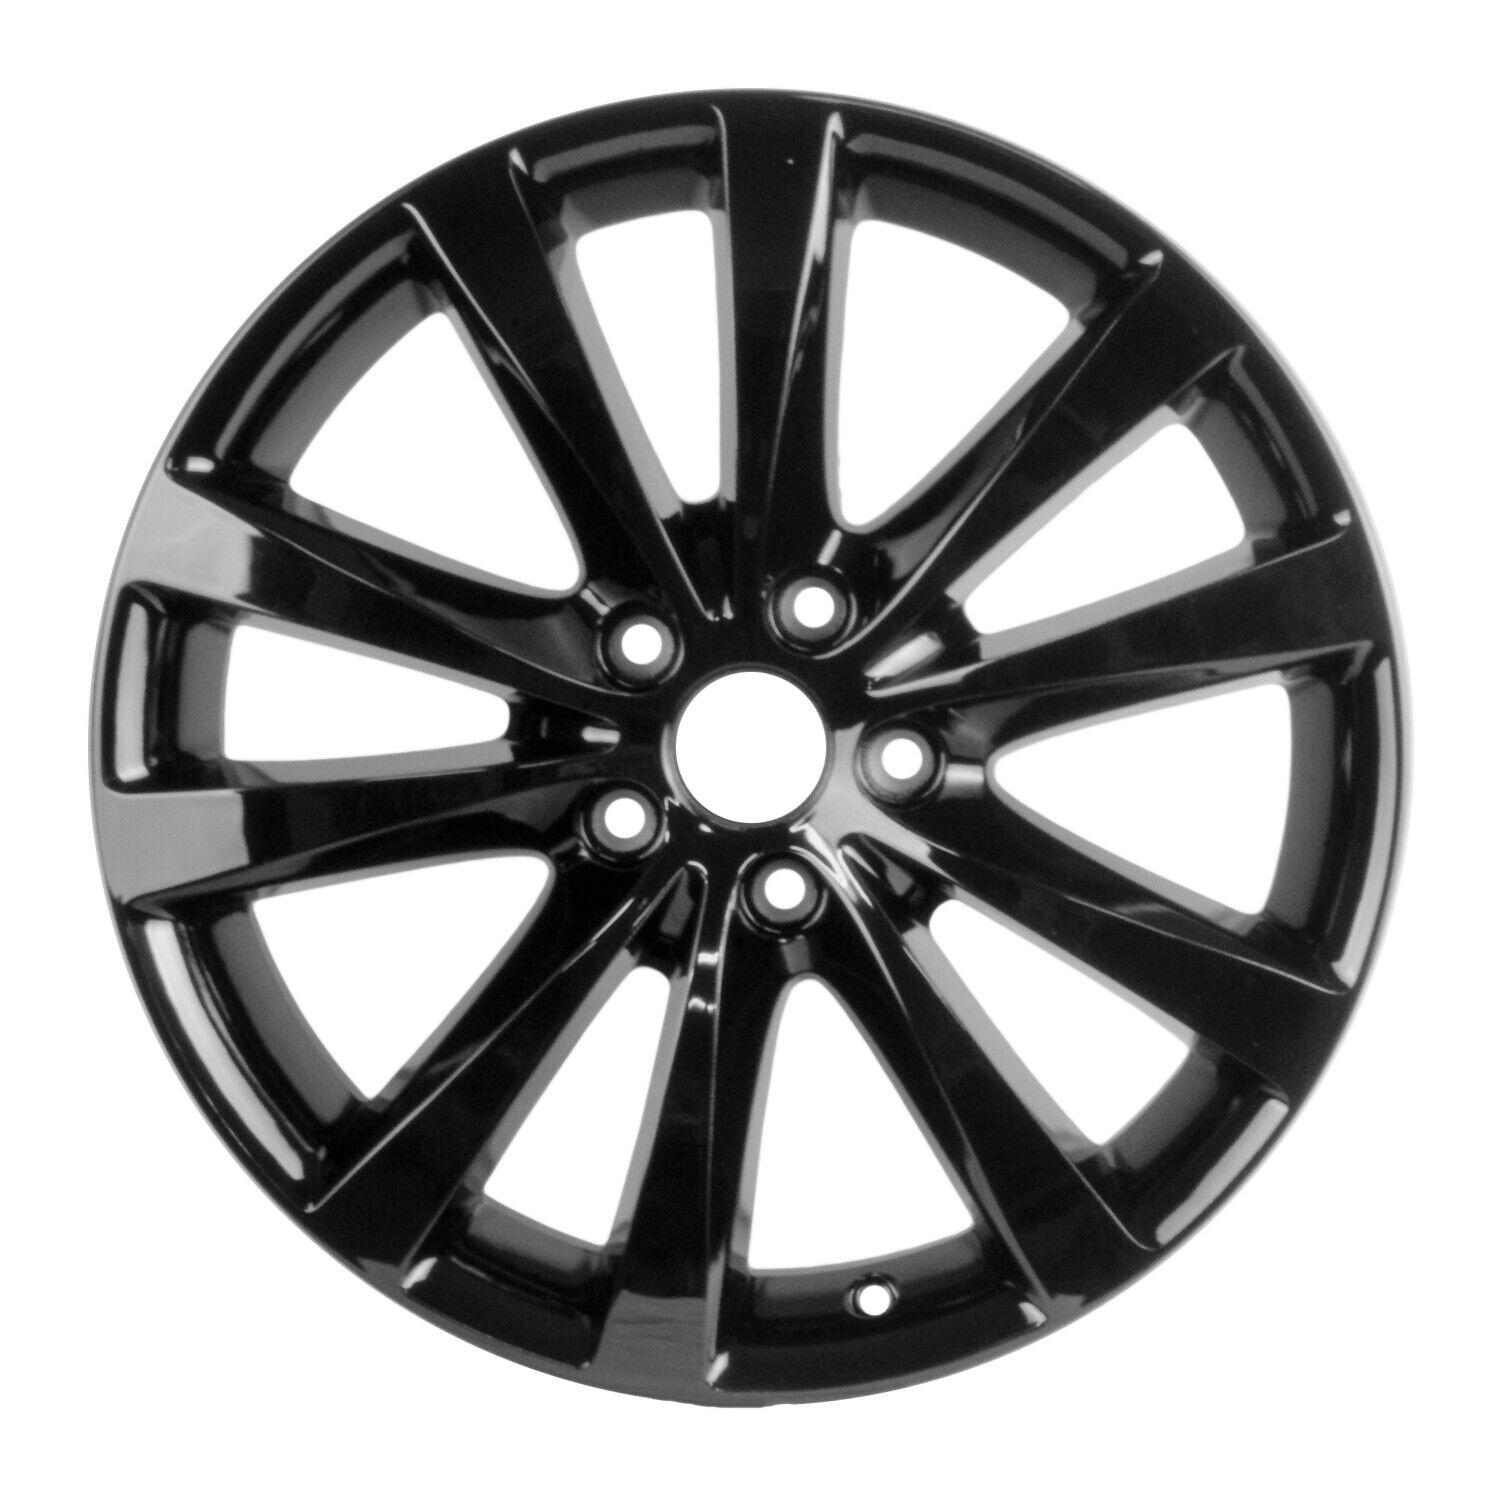 02504 Reconditioned OEM Aluminum Wheel 18x7 fits 2012-2014 Dodge Avenger